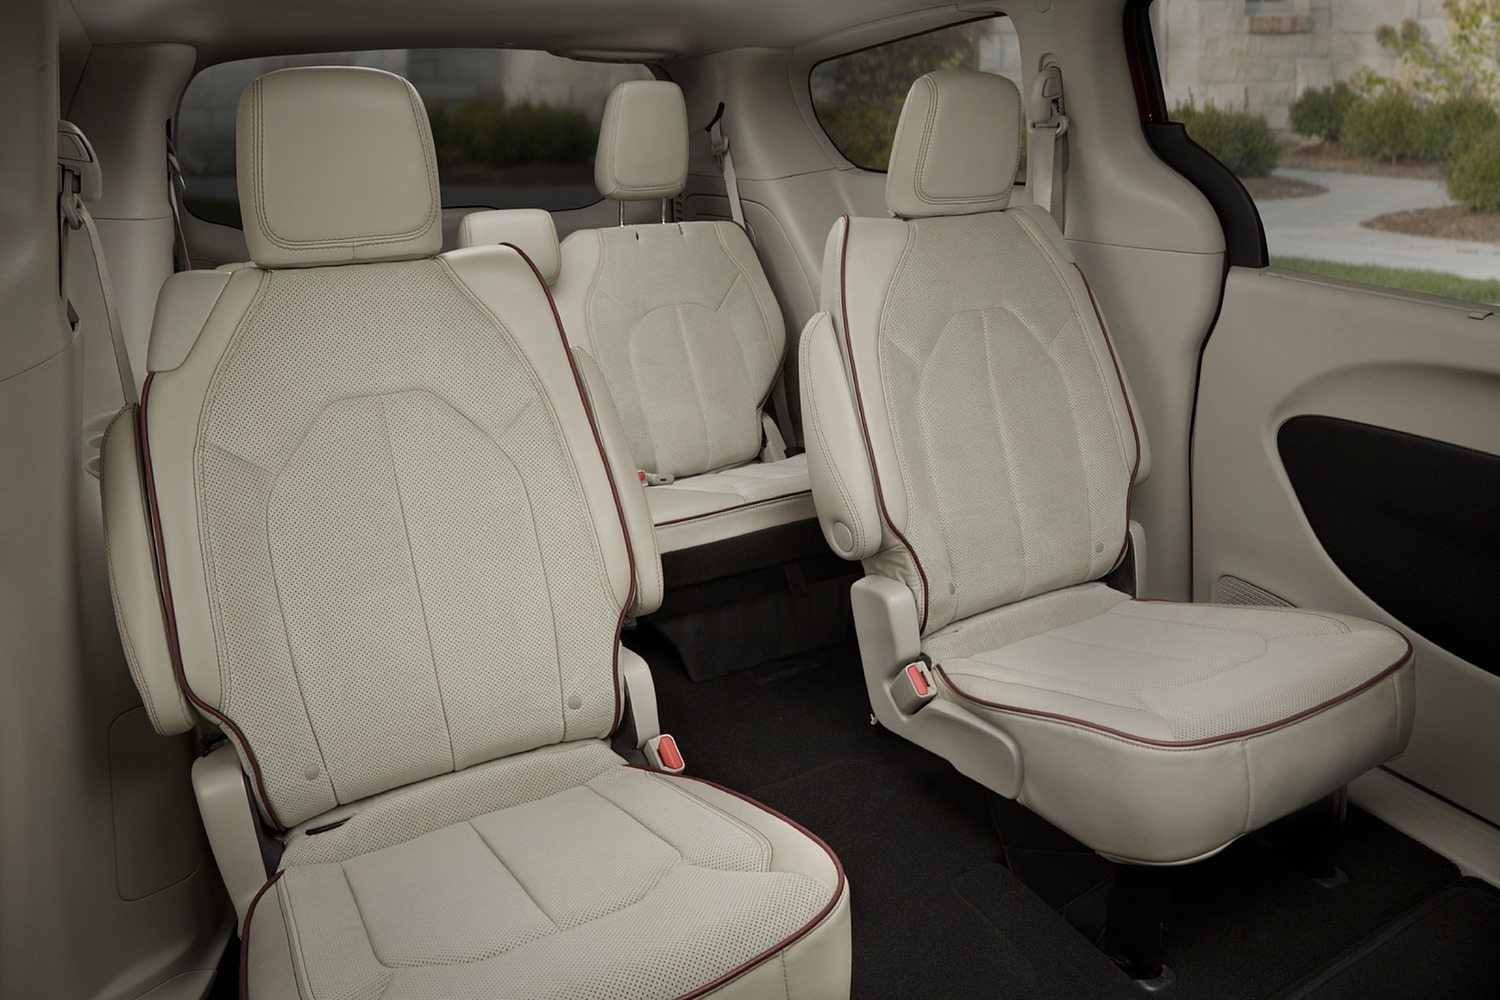 2017 Chrysler Pacifica Limited Passenger Minivan Rear Interior Shown